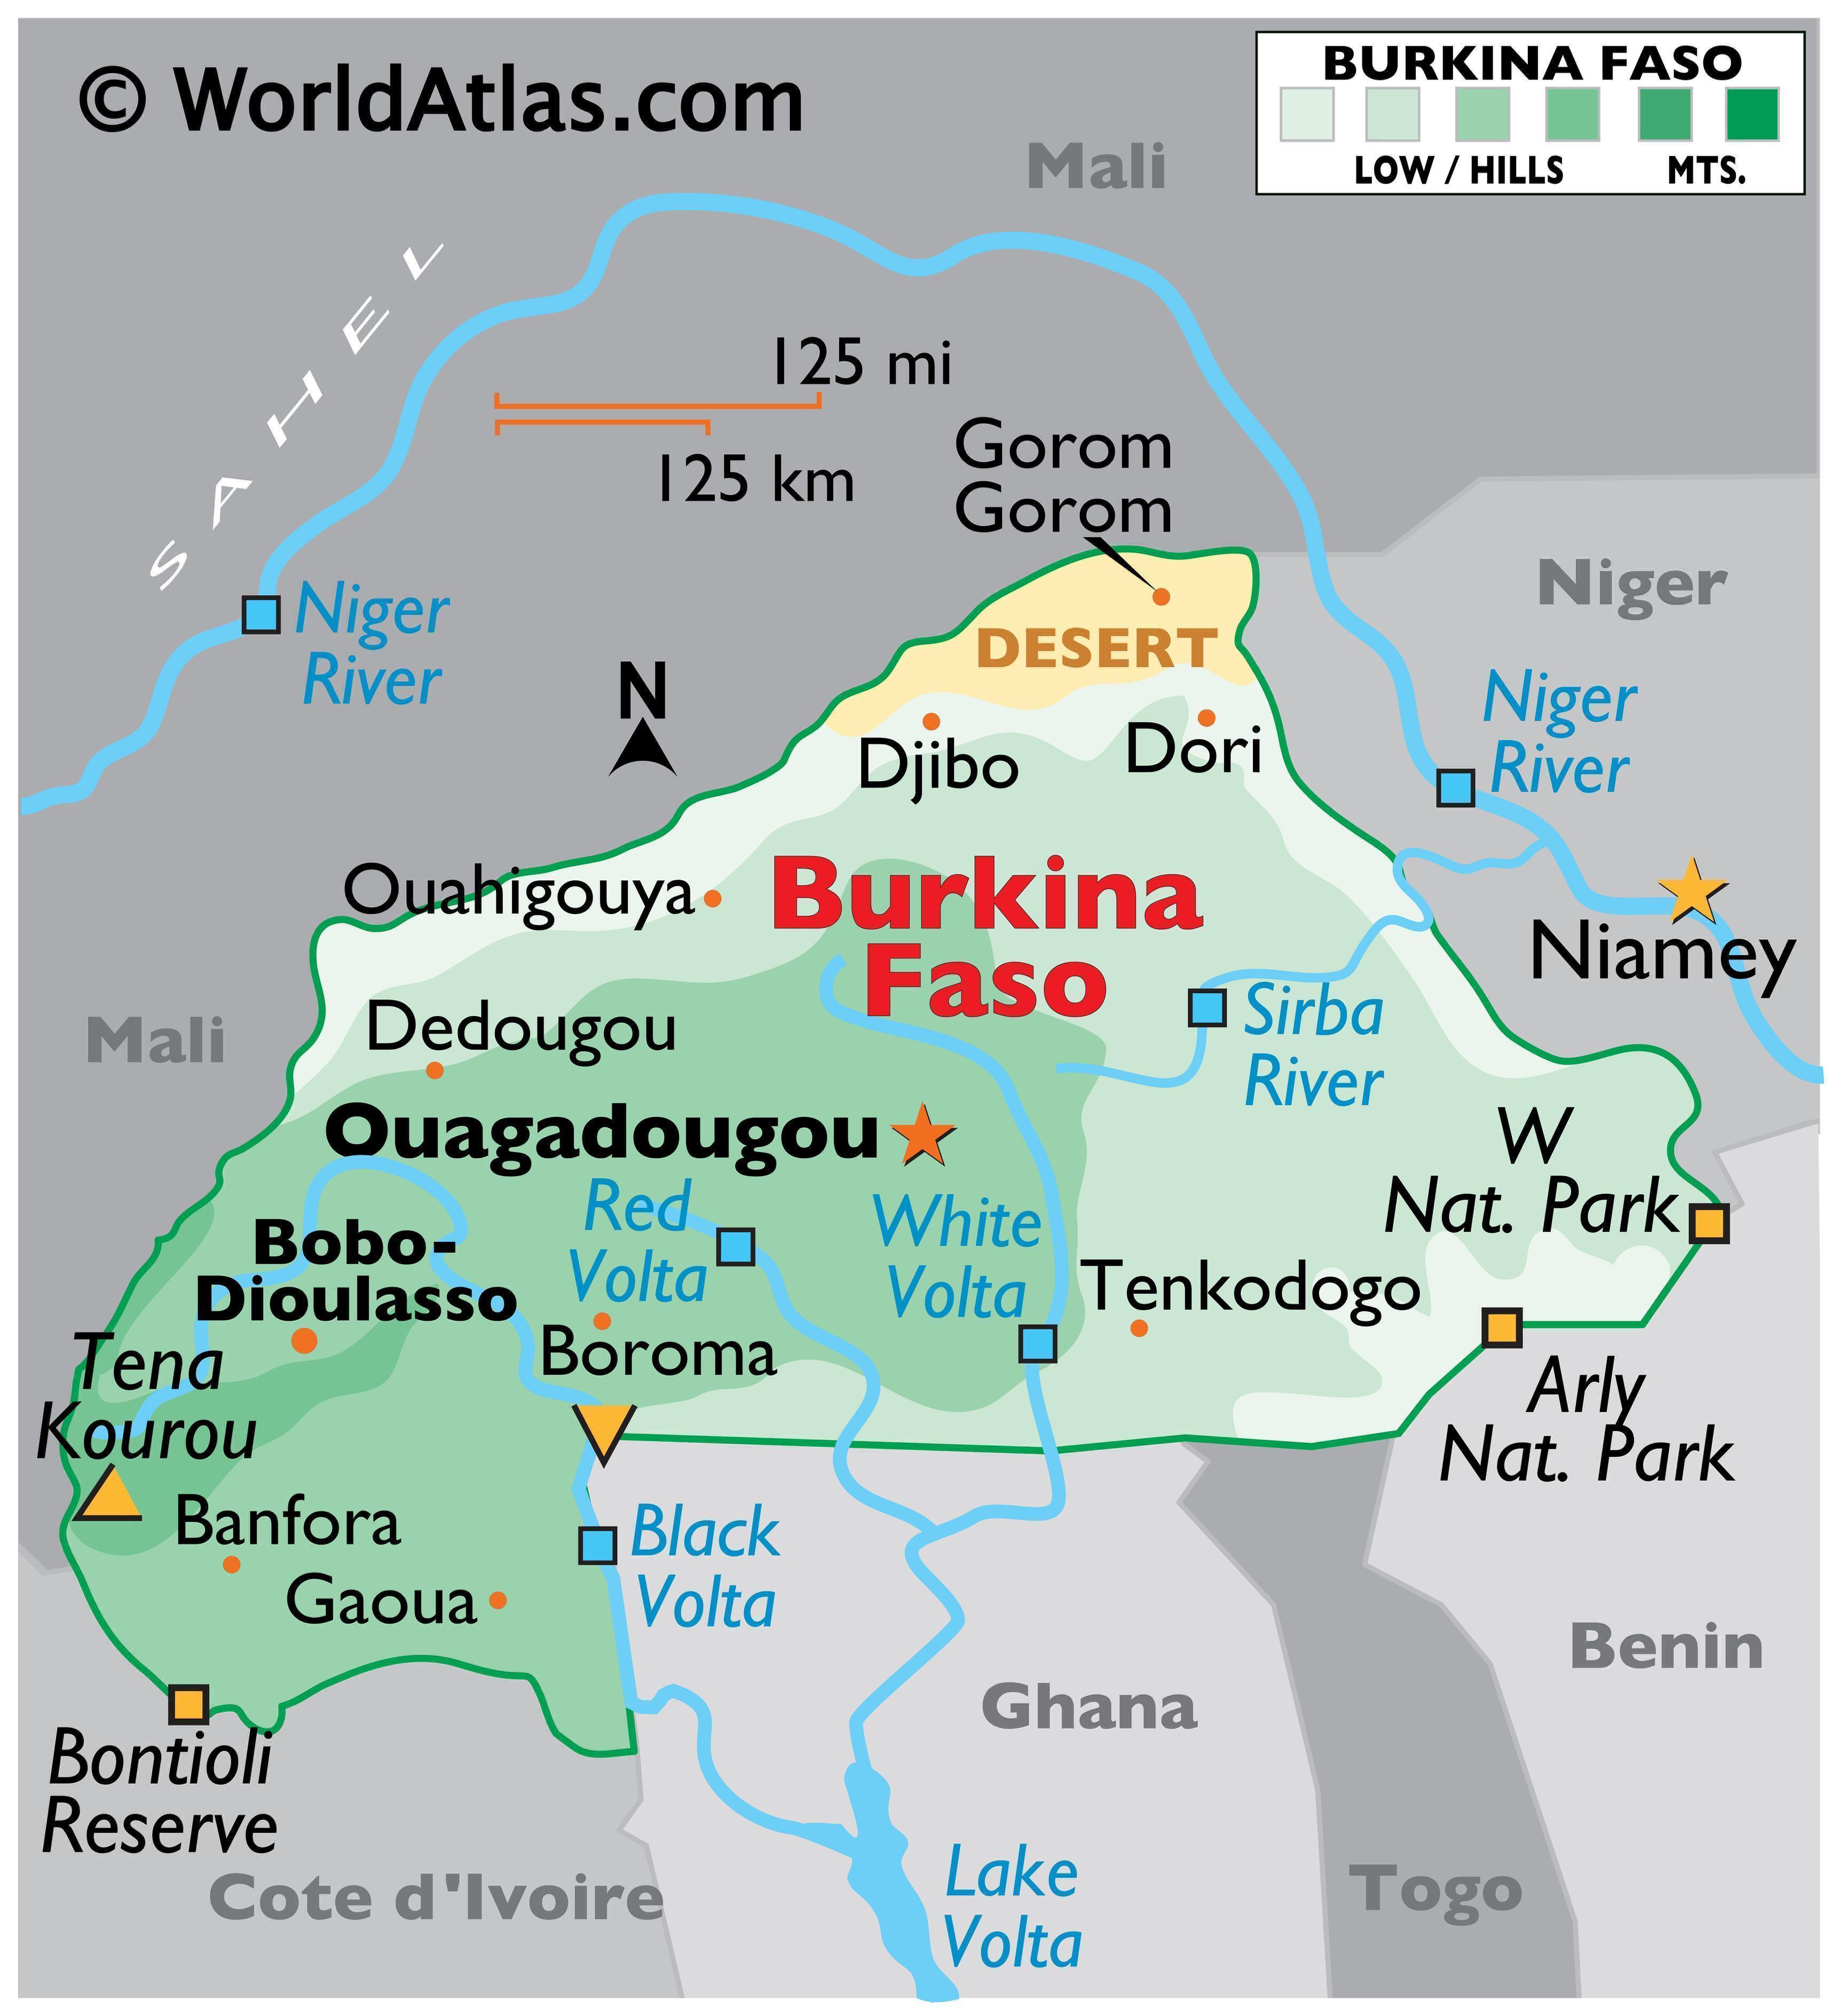 burkina faso karta Burkina Faso Map / Geography of Burkina Faso / Map of Burkina Faso  burkina faso karta